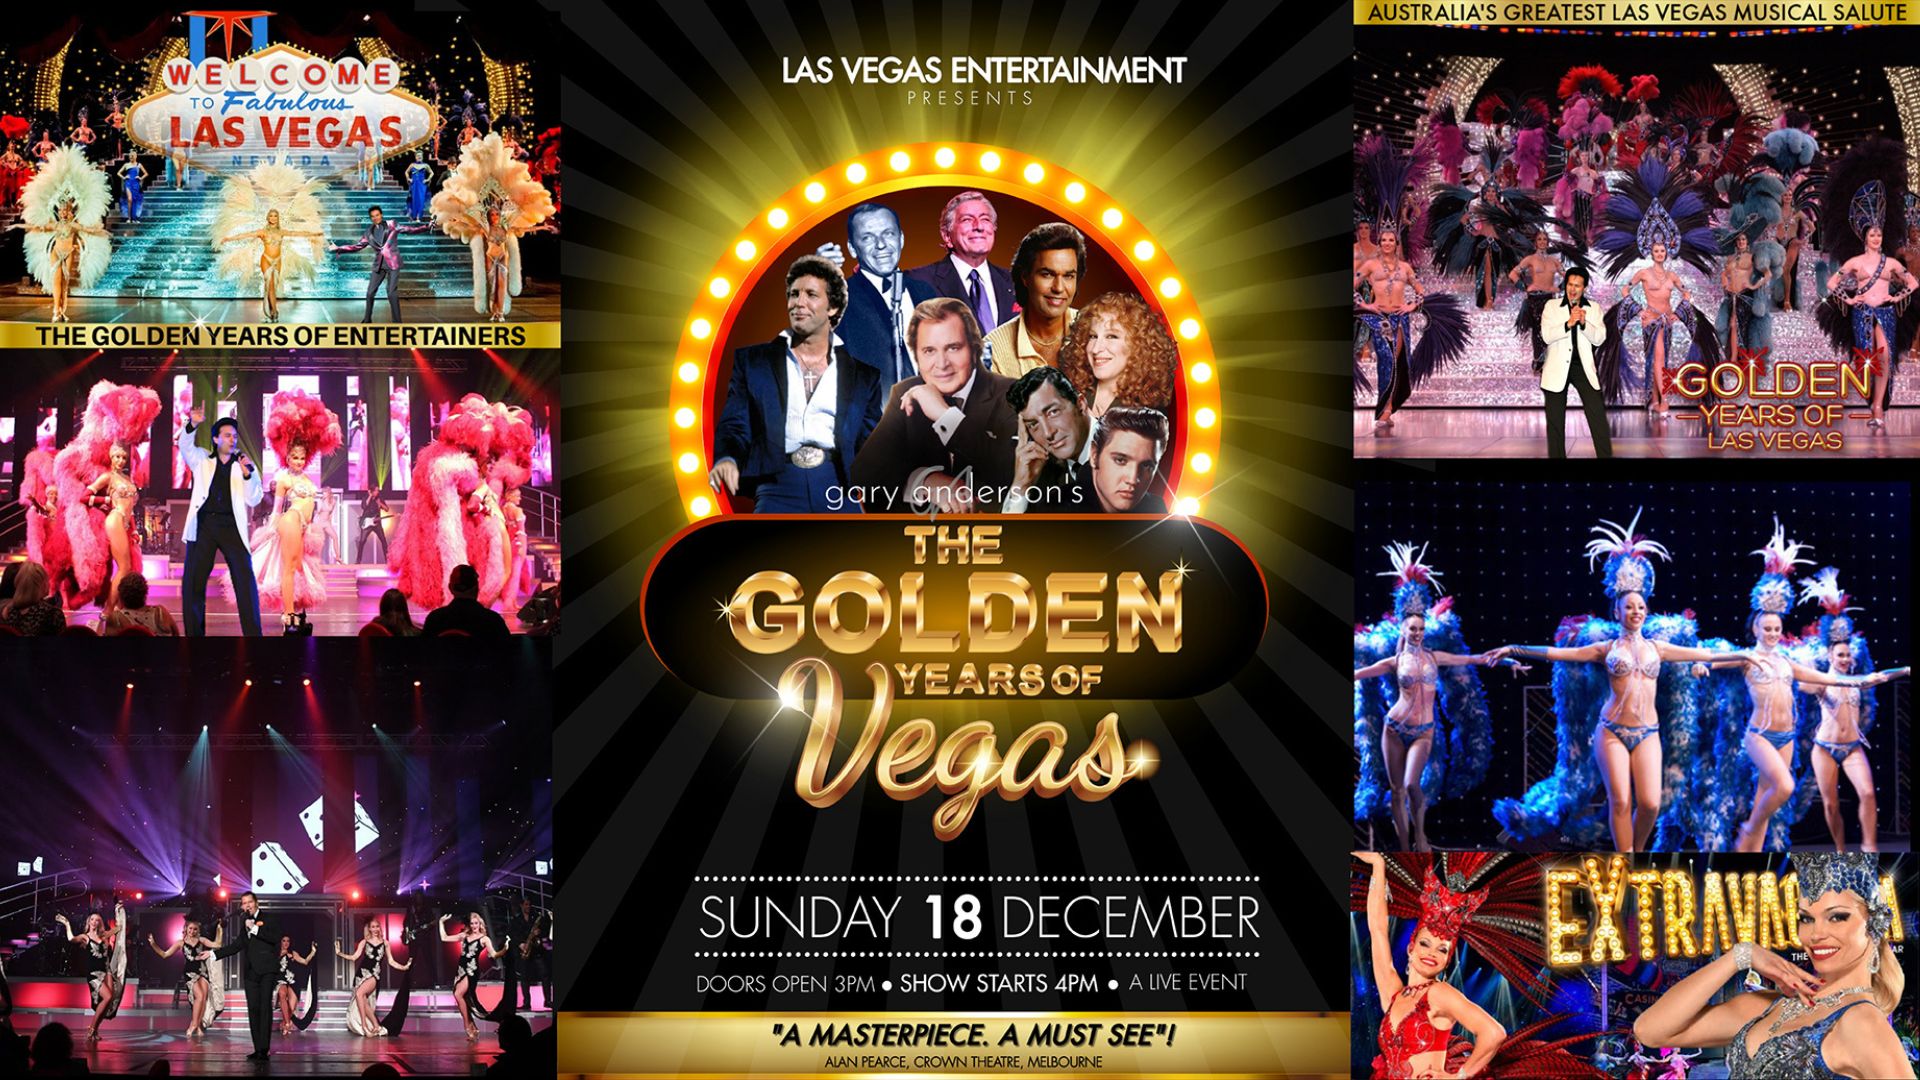 The Golden Years of Vegas MANPAC Mandurah